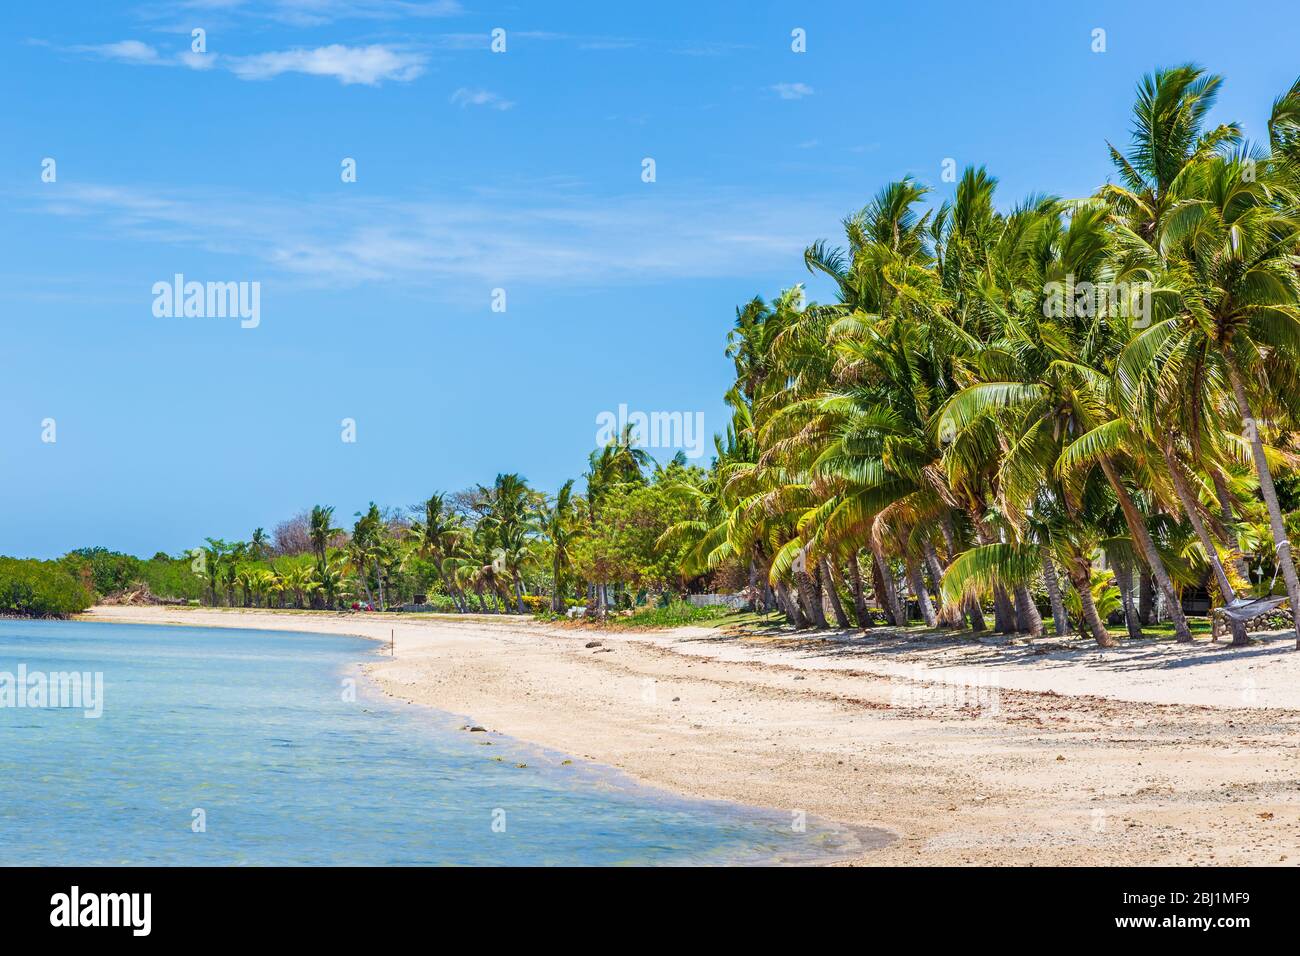 Nalamu Beach, backed by palm trees, under a blue sky, Fiji. Stock Photo